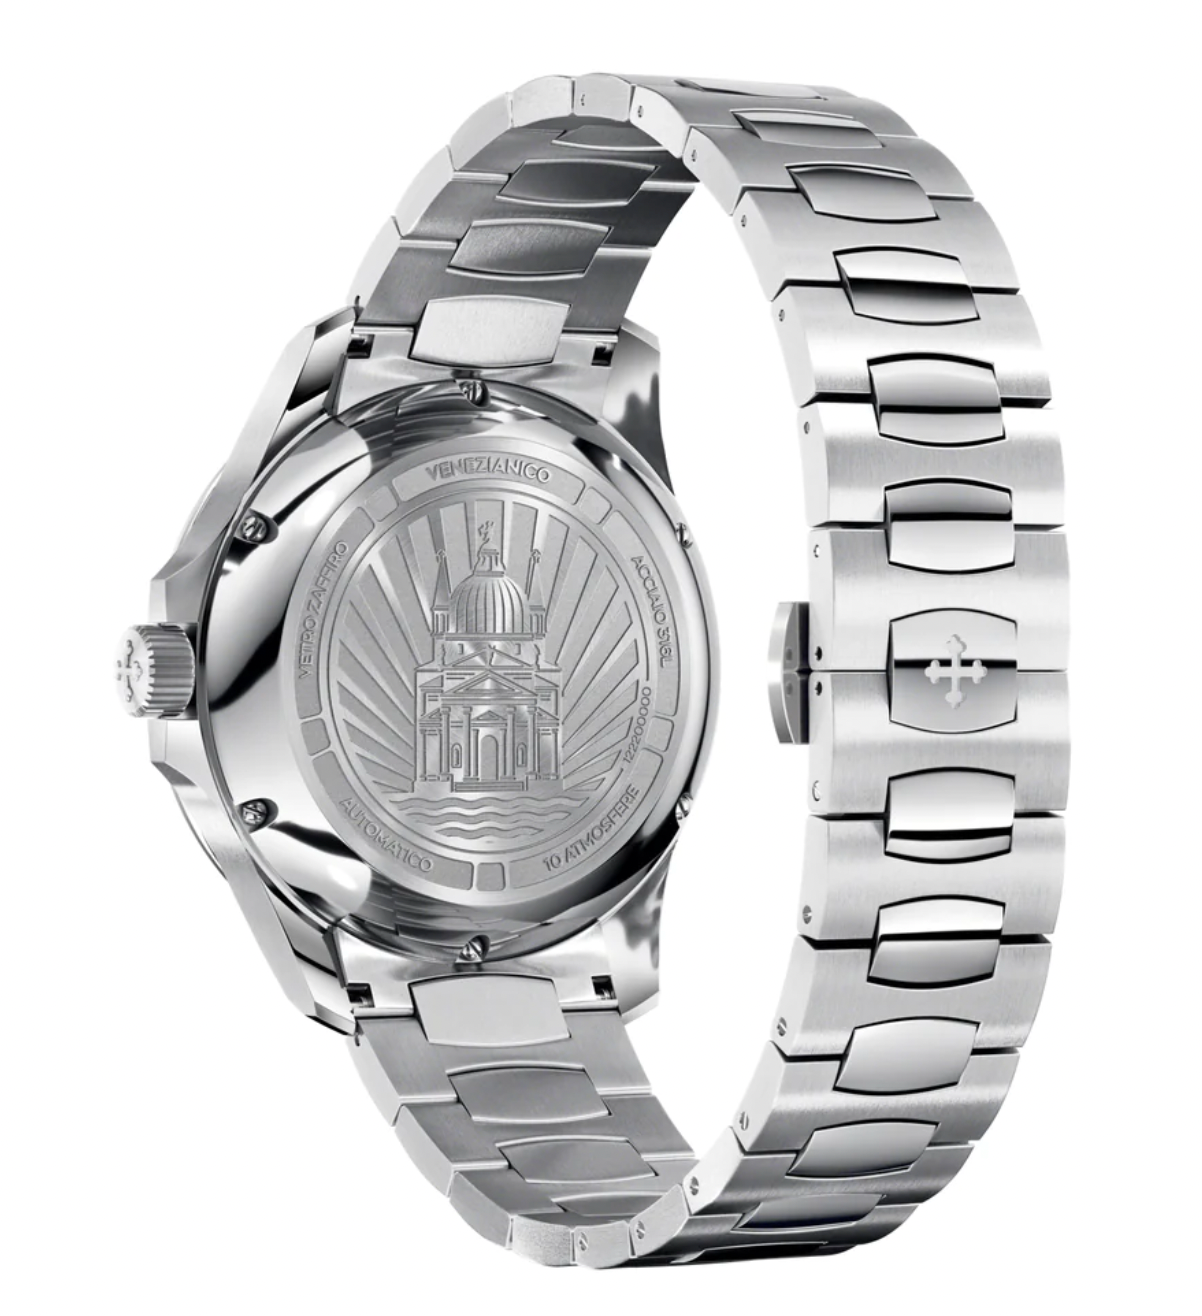 Venezianico Automatic Watch Redentore 40 White SS 1221505C